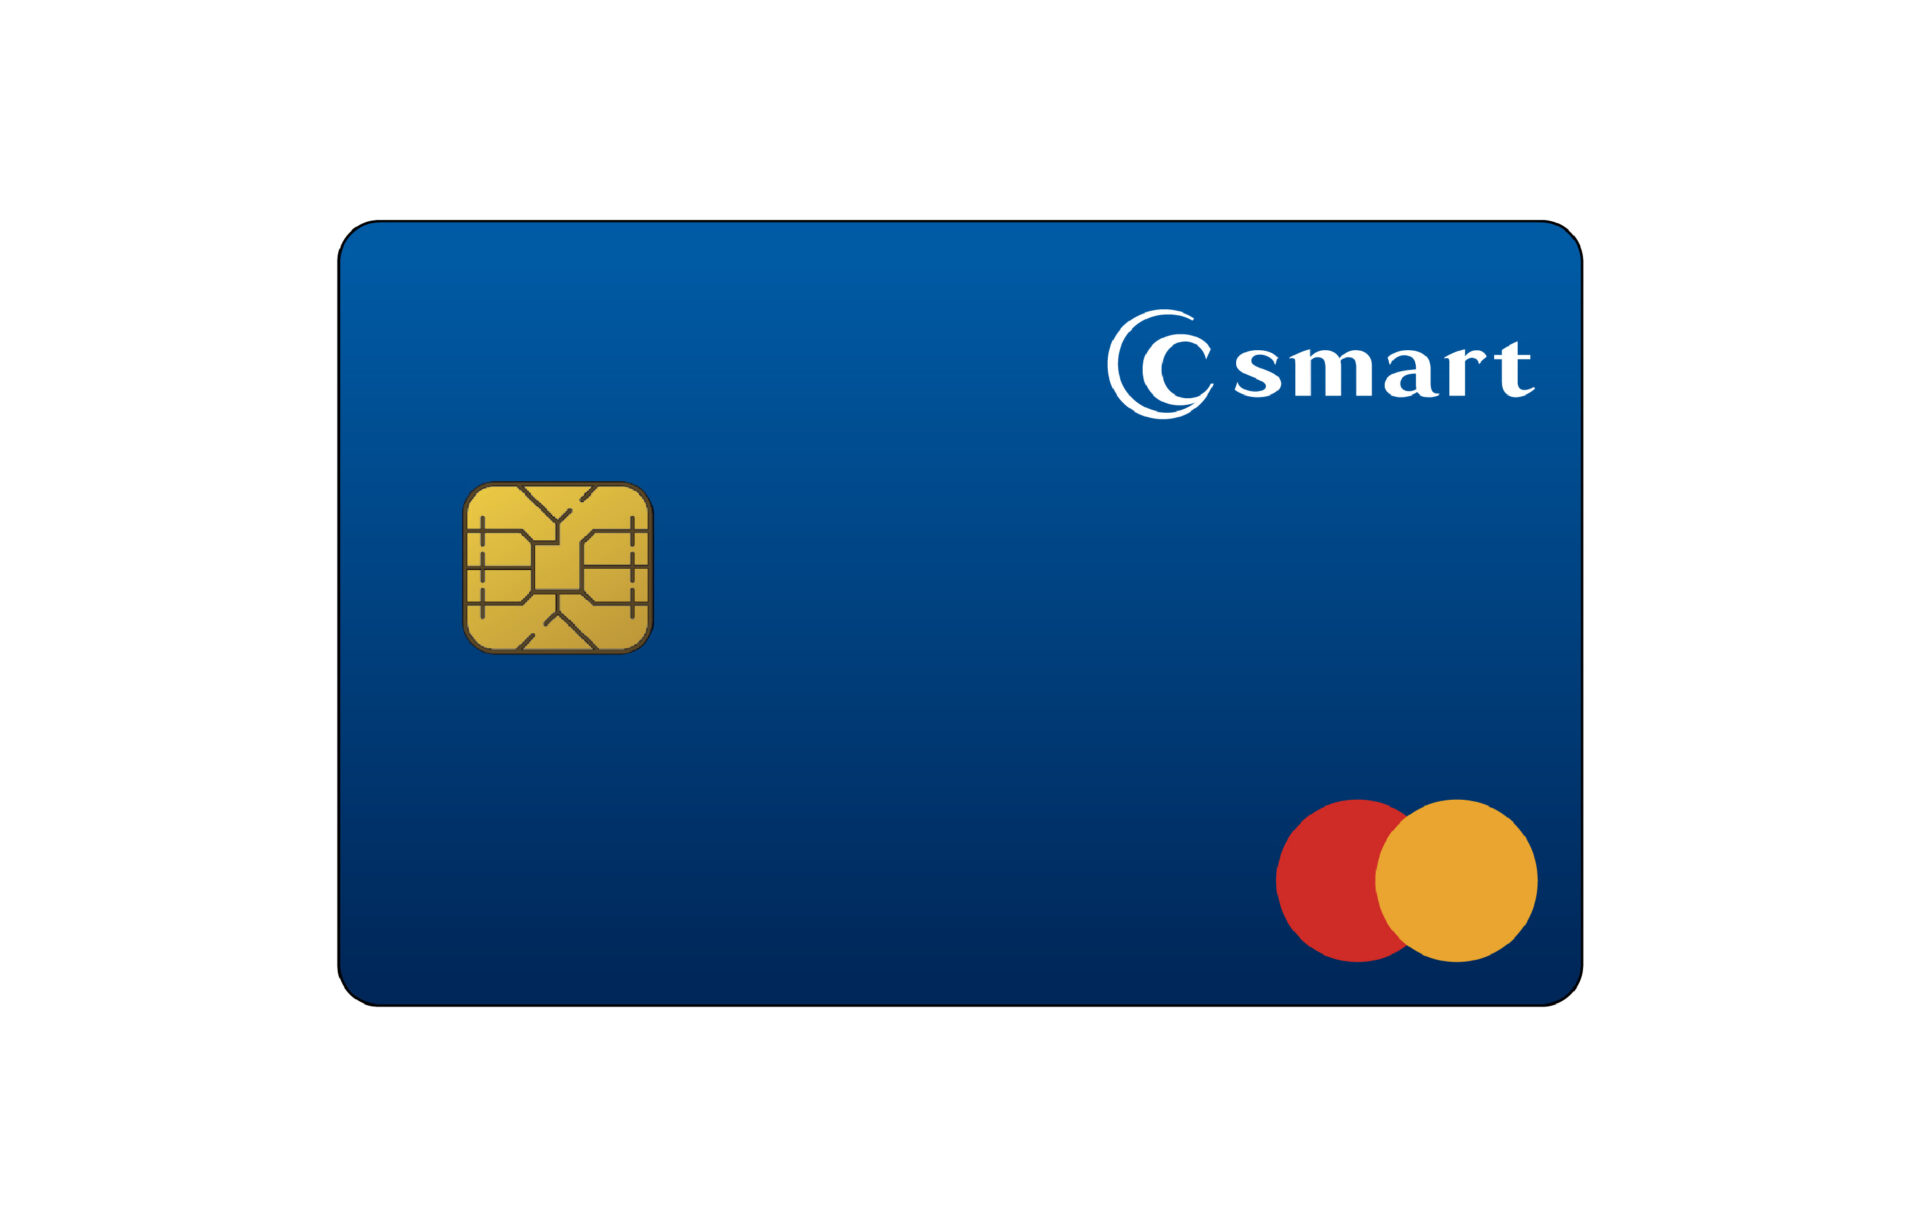 C smart Cardキャンペーン開始！のイメージ画像